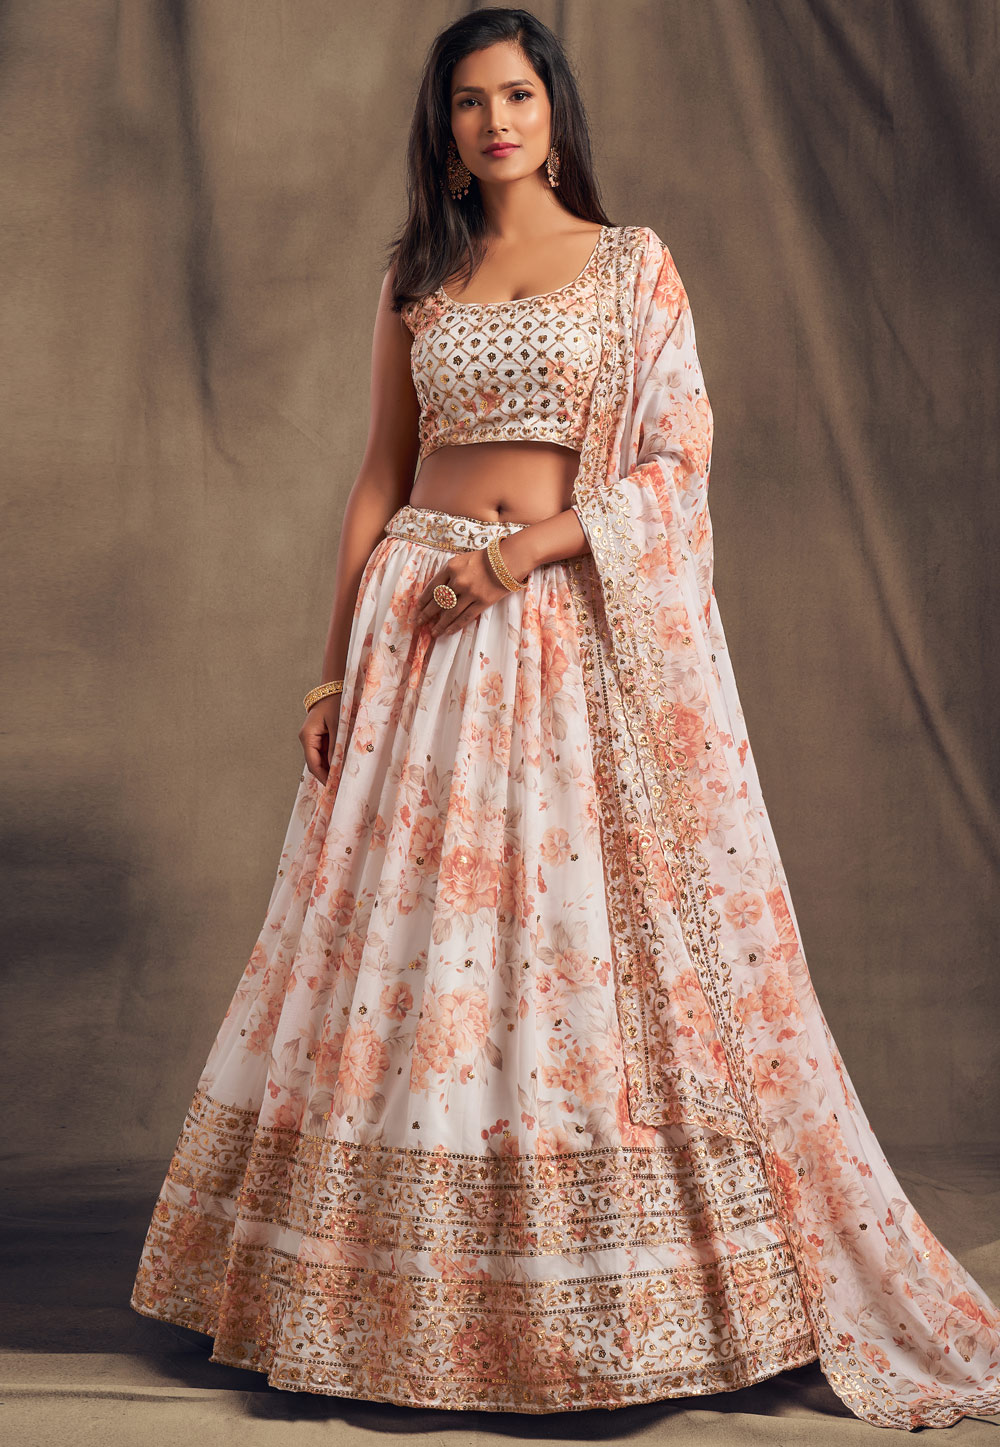 Maroon Sequins Work Lehenga Choli Indian Ethnic Lengha Chunri Skirt Sari  Saree | eBay